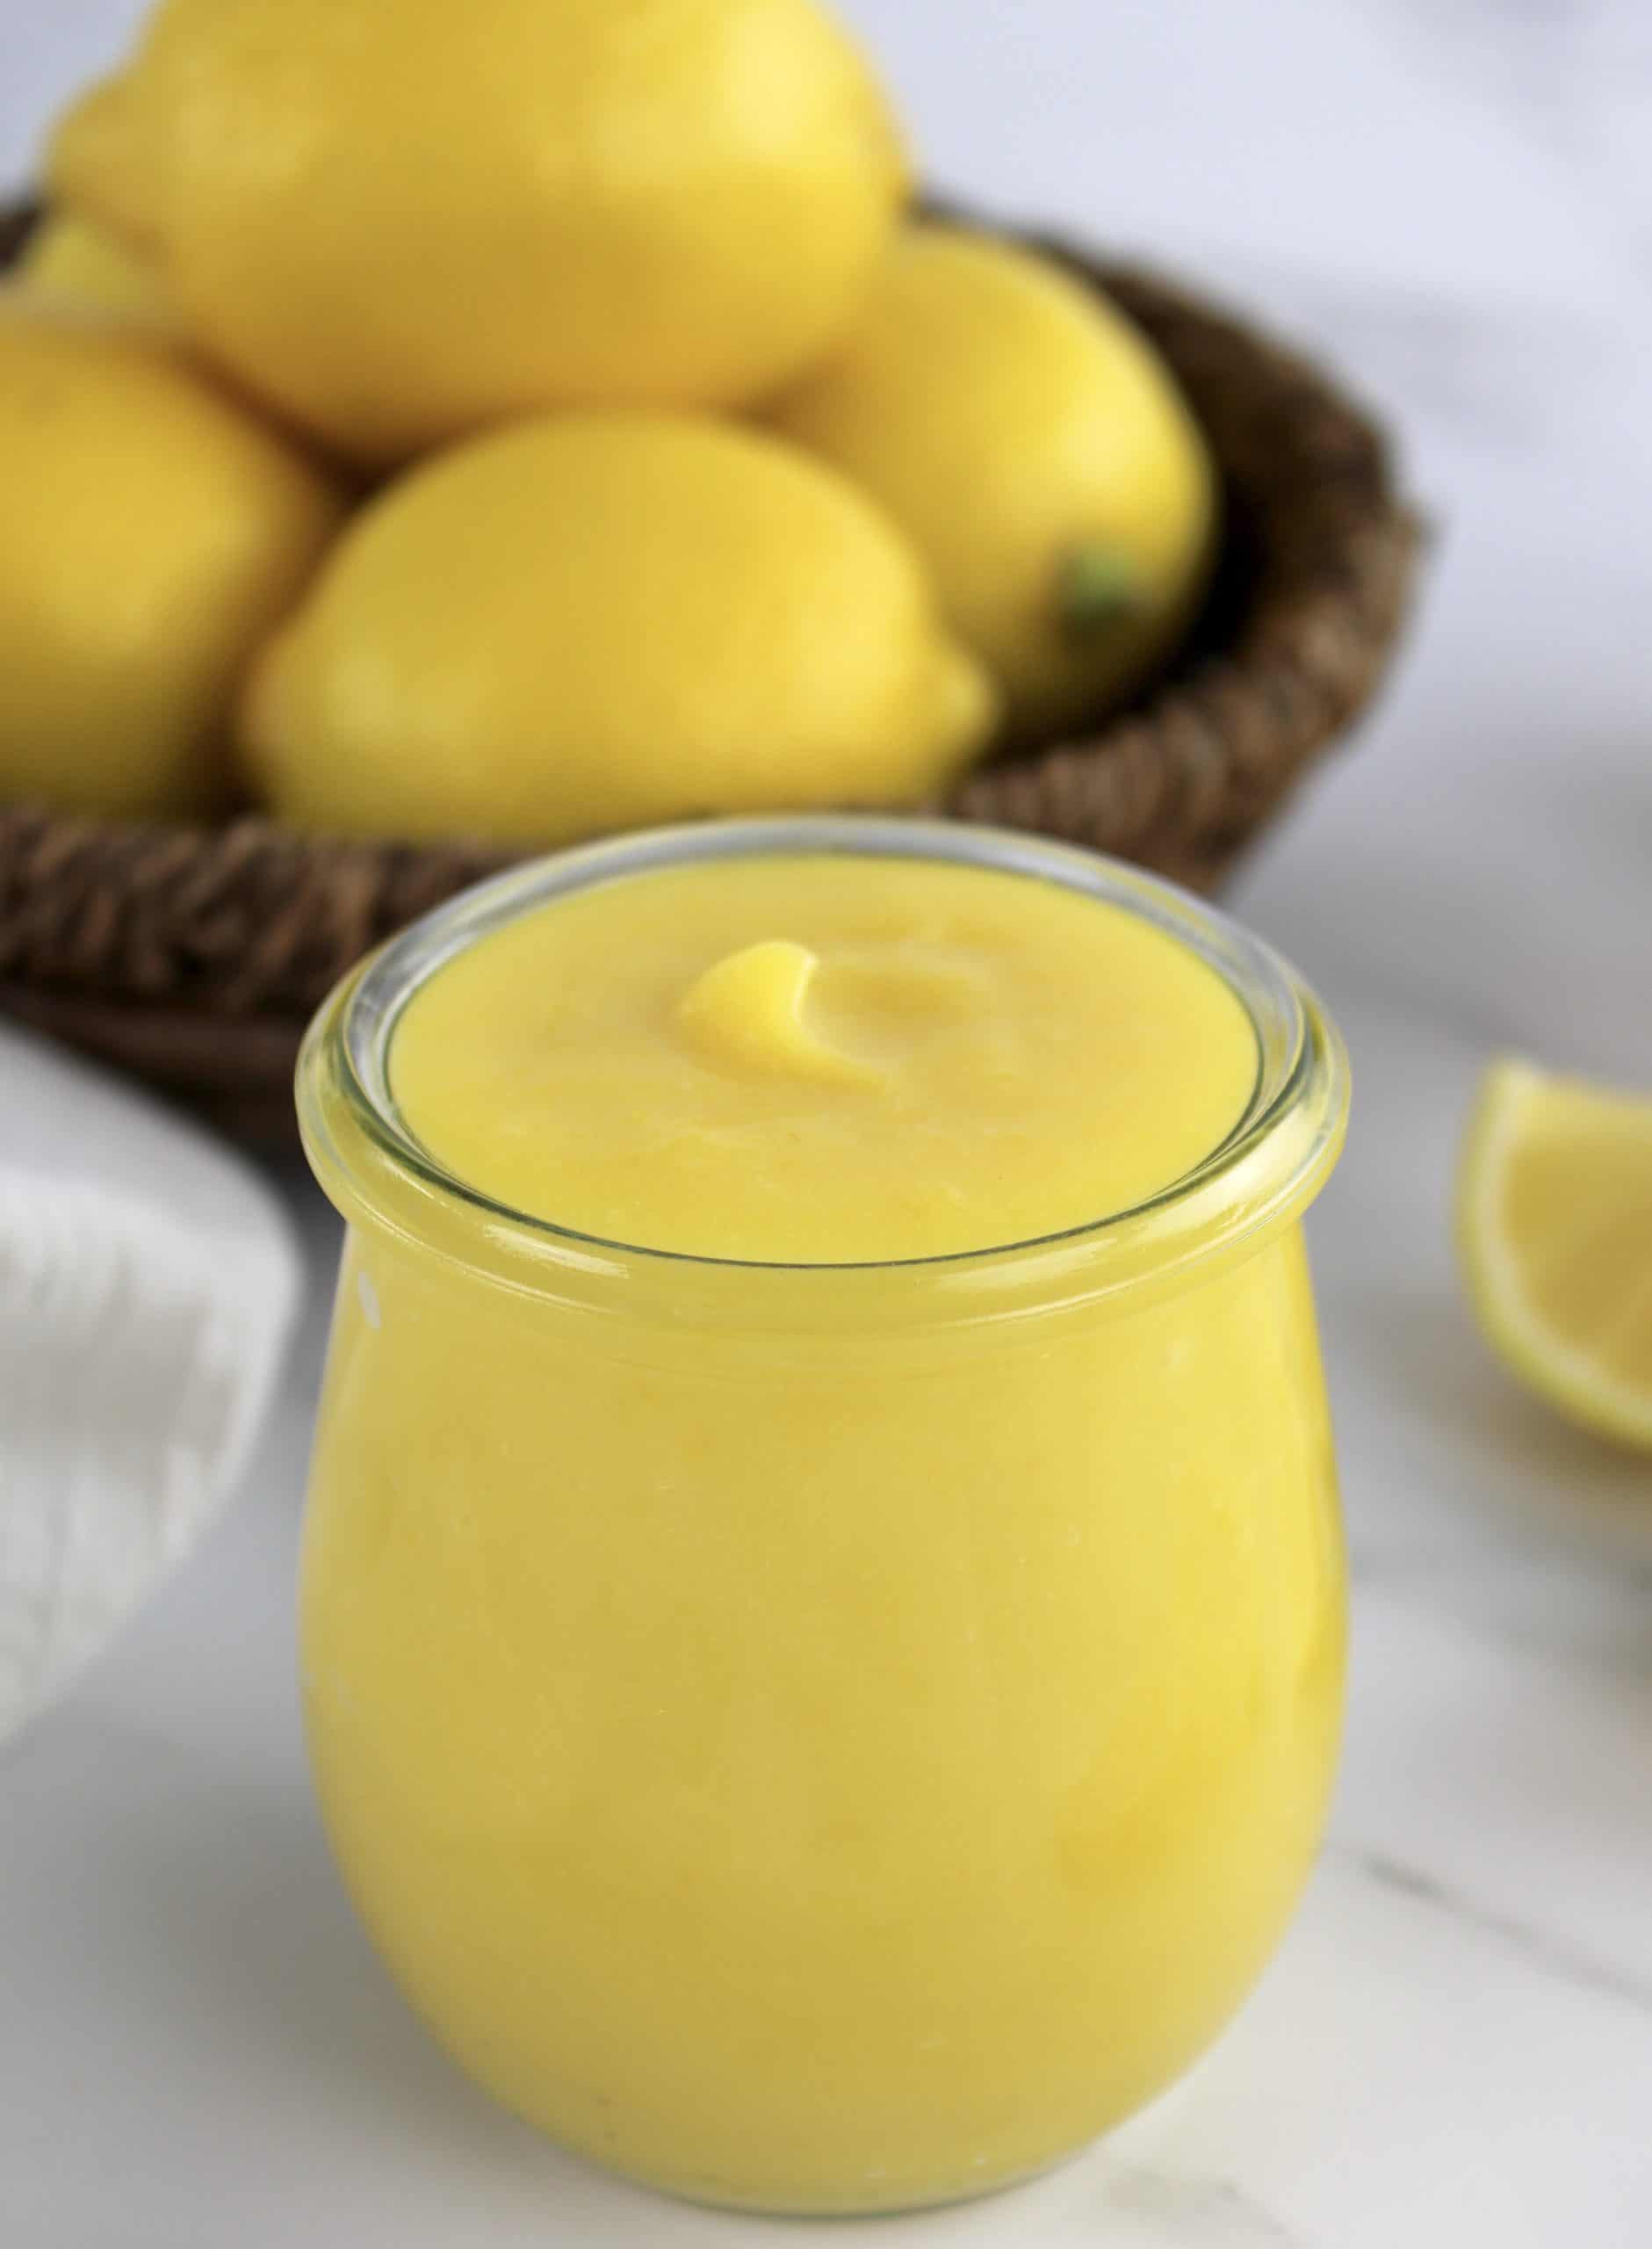 5 Minute Keto Lemon Curd in open glass jar with lemons in background